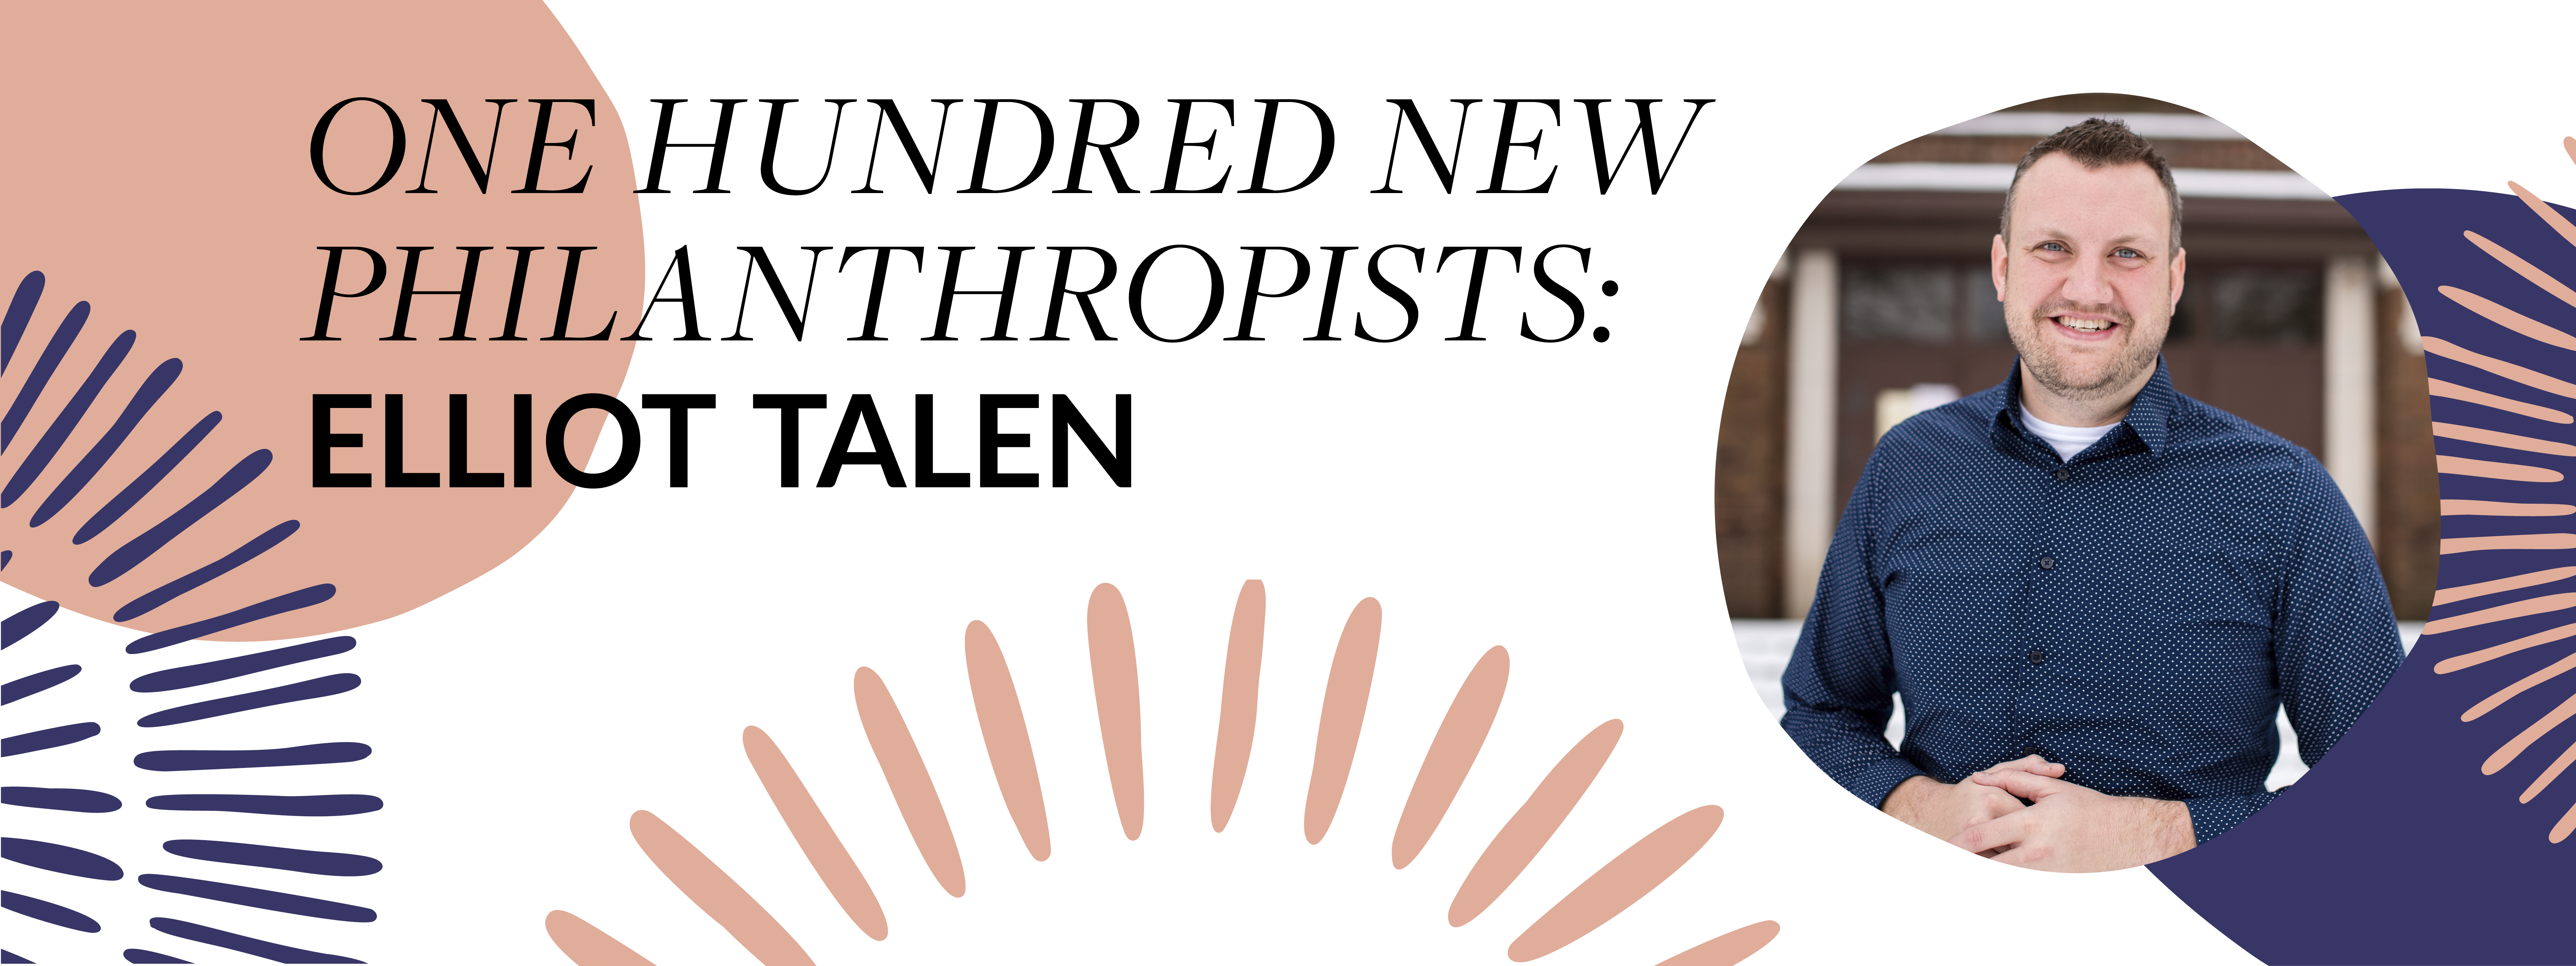 100-New-Philanthropists.jpg#asset:4982